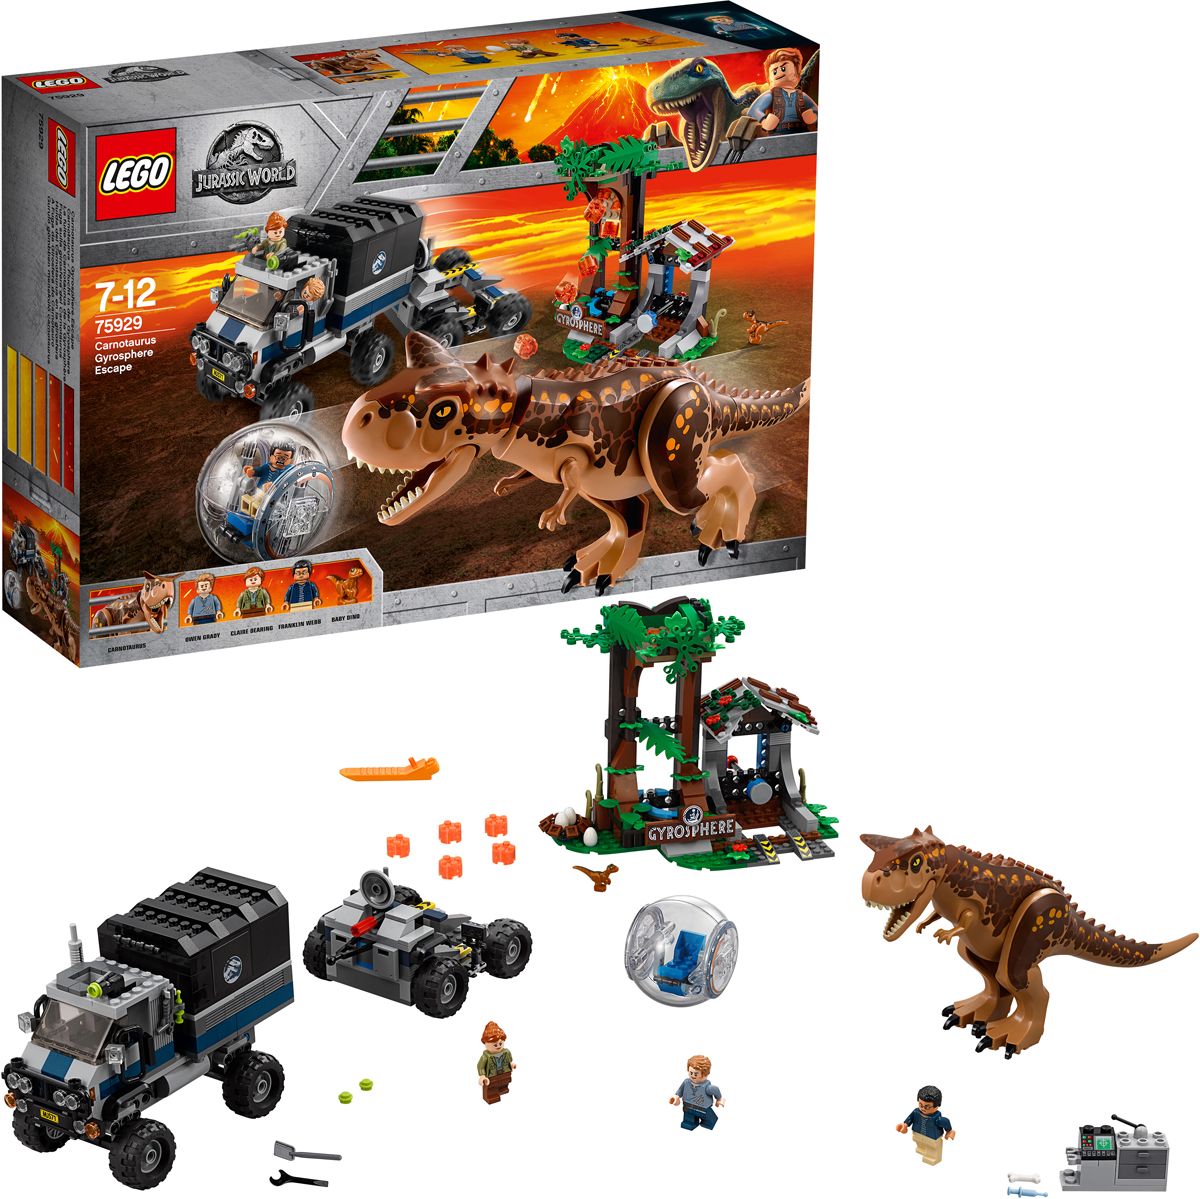 LEGO Jurassic World 75929      